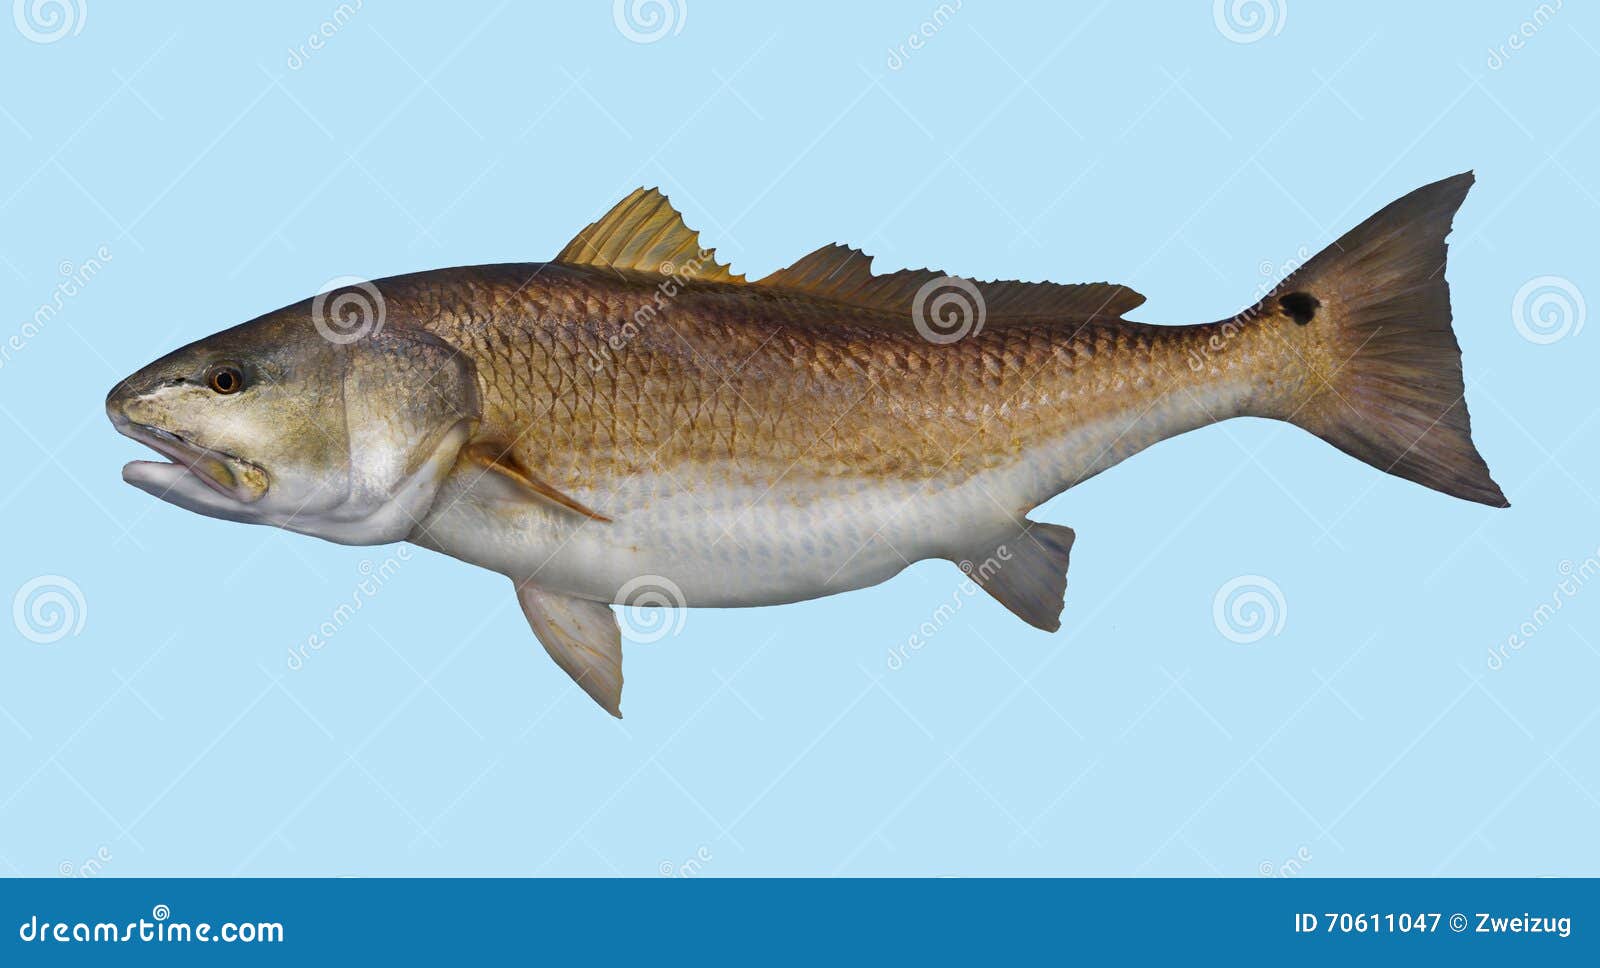 https://thumbs.dreamstime.com/z/red-drum-redfish-fishing-portrait-hard-fighting-saltwater-predator-feeds-smaller-fish-crustaceans-70611047.jpg